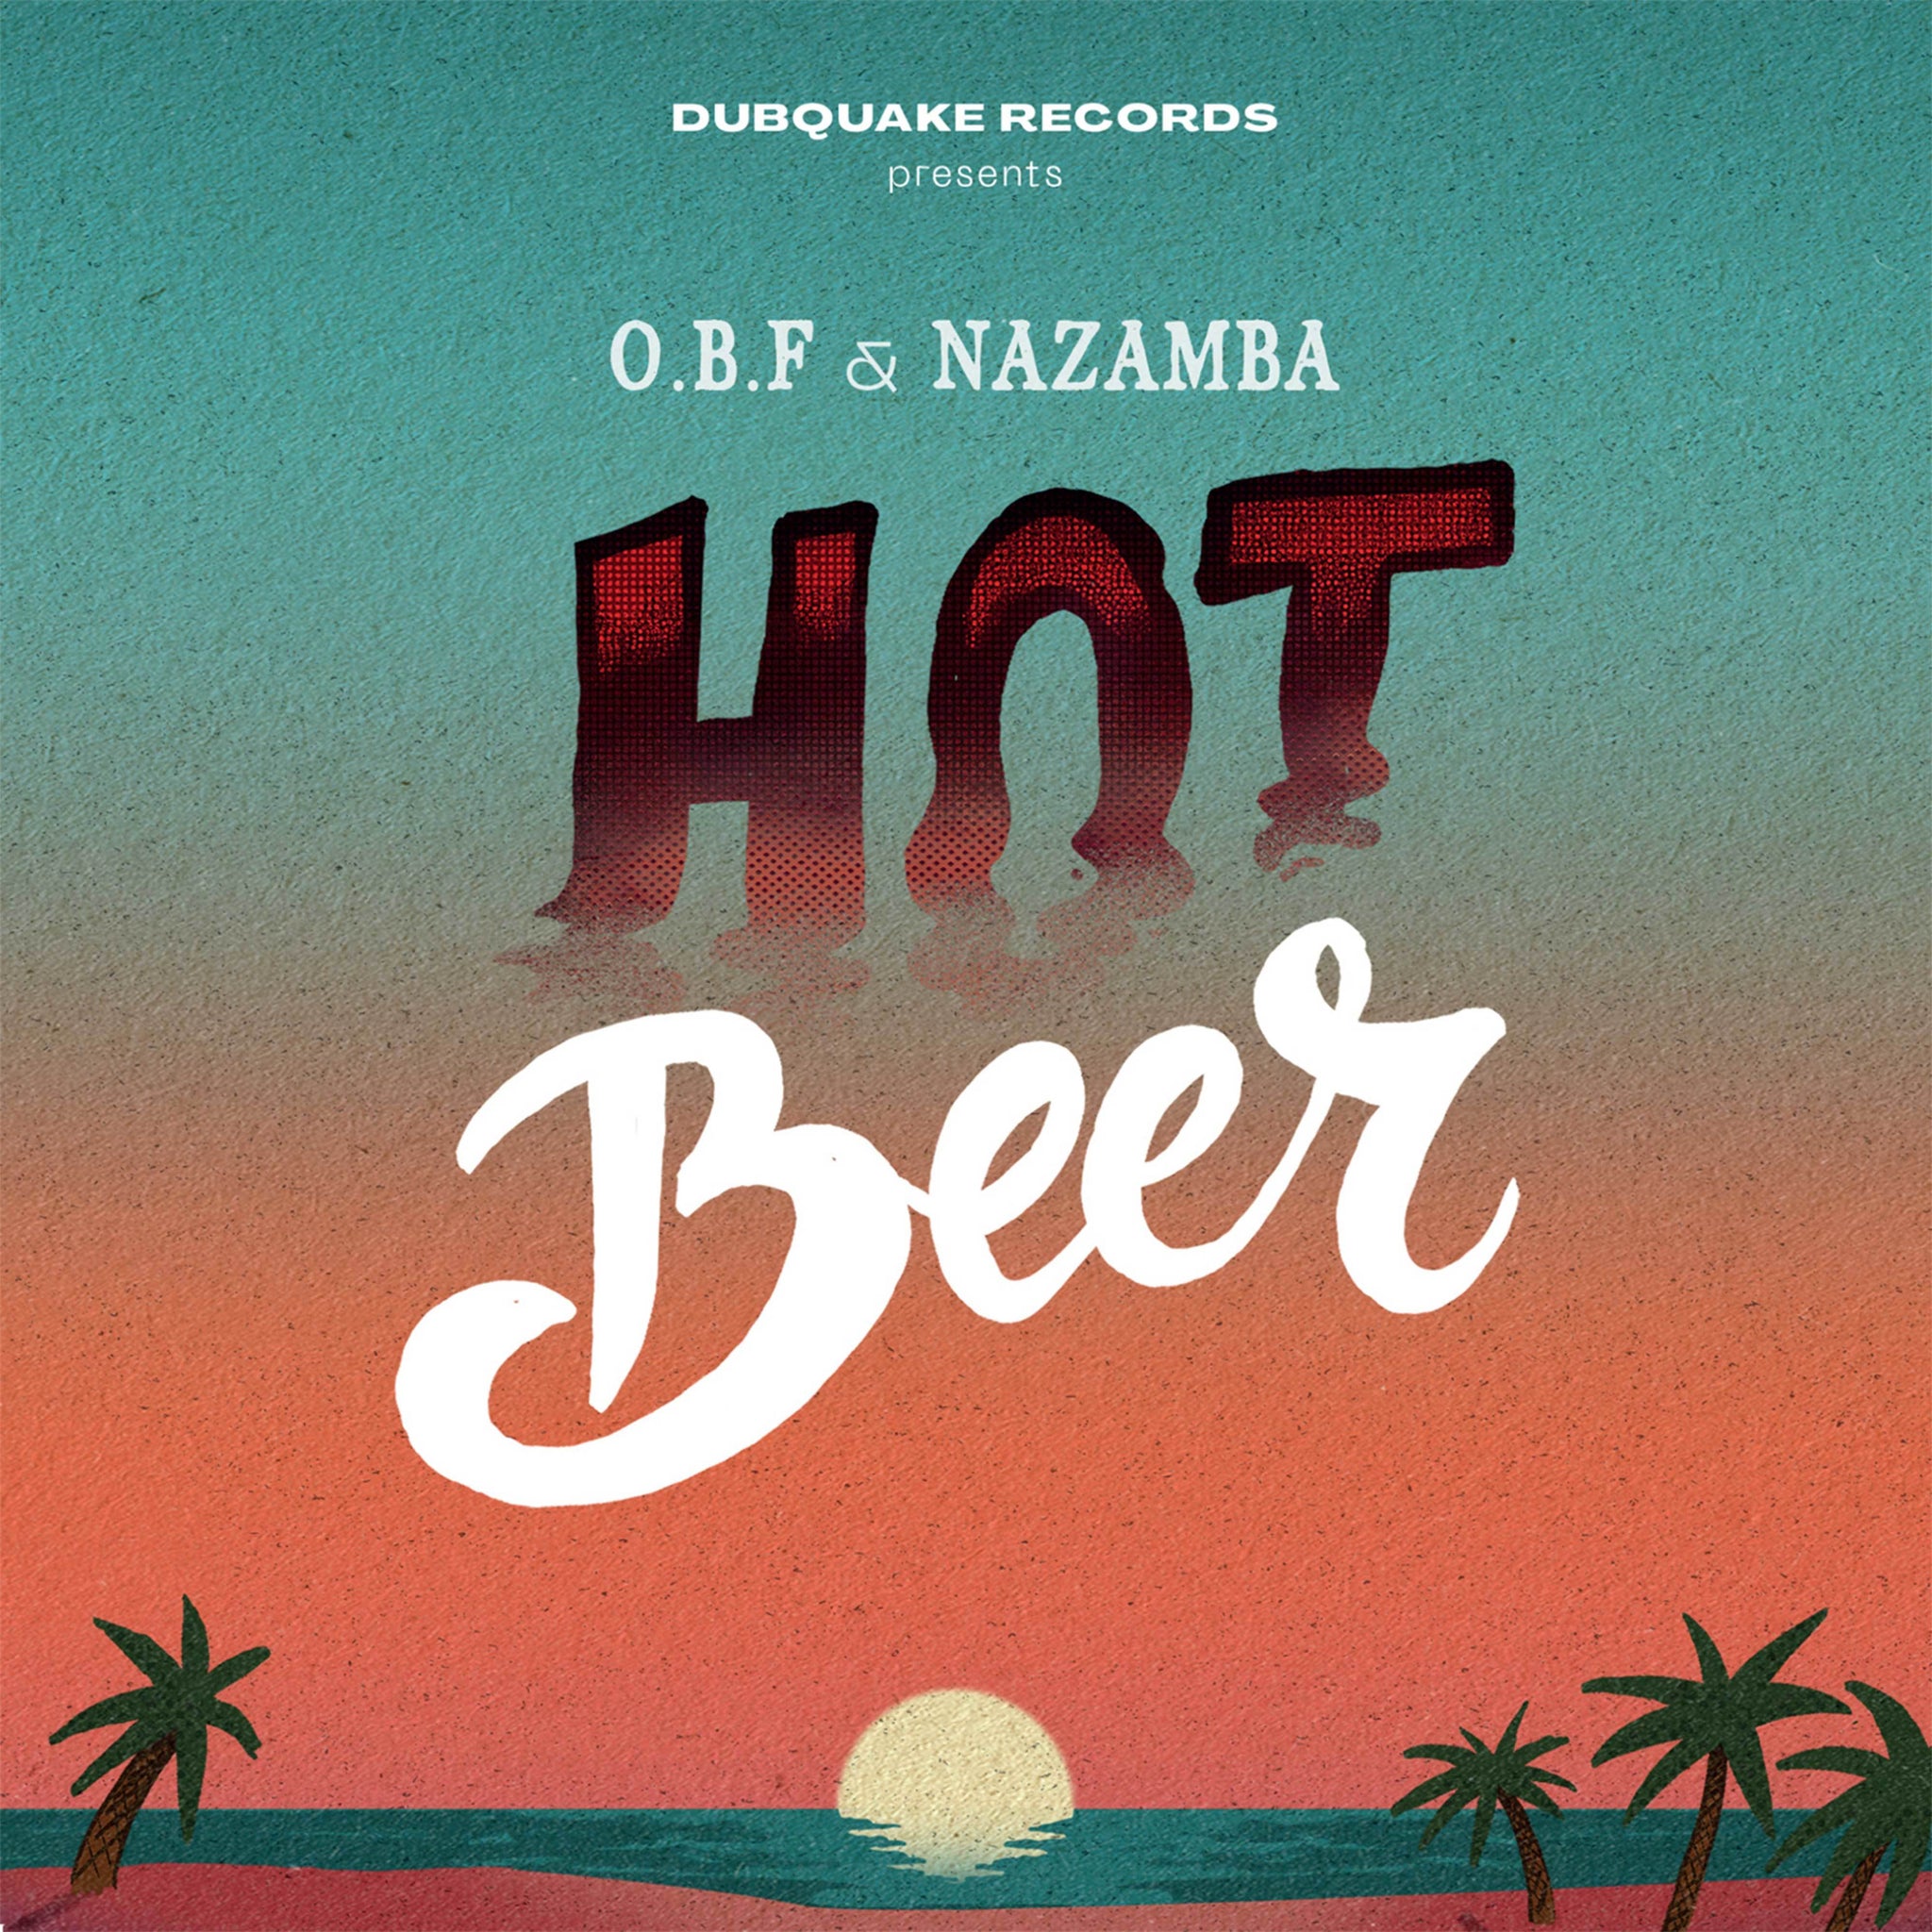 O.B.F & Nazamba - Hot Beer